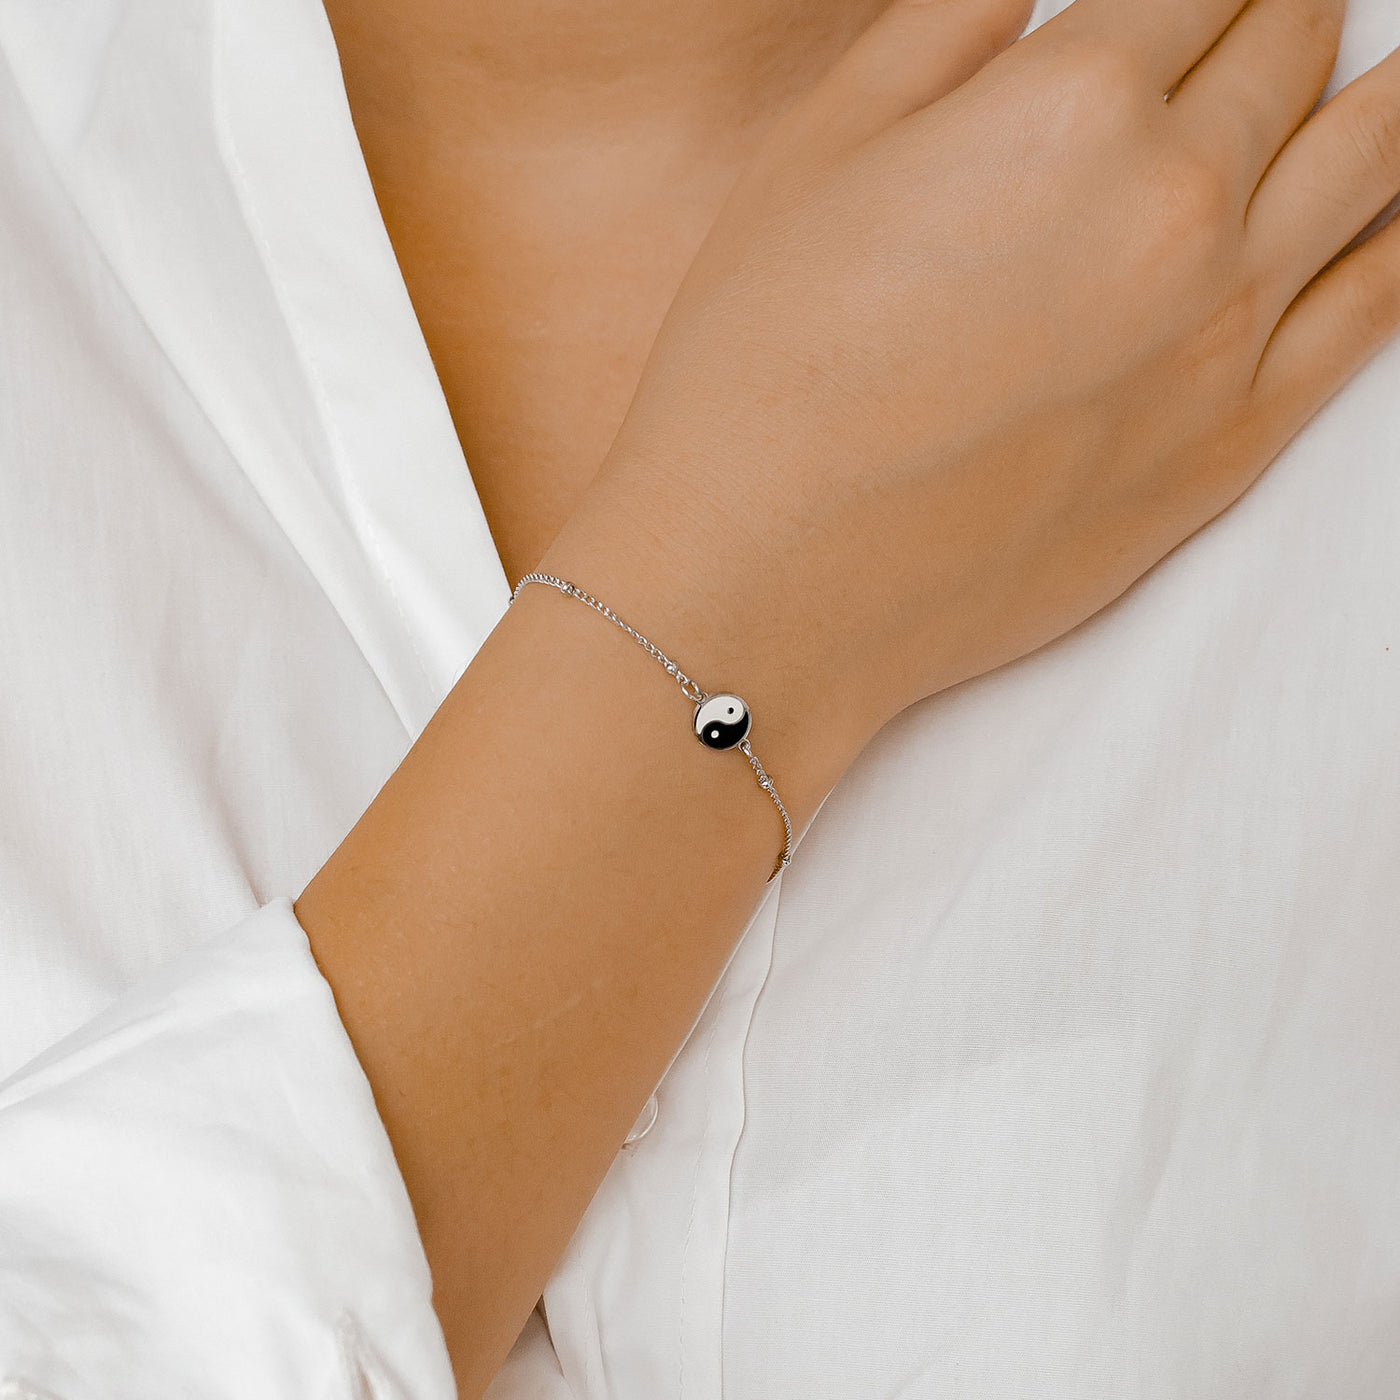 Yin Yang Armband im Kugelkette-Design in Silber